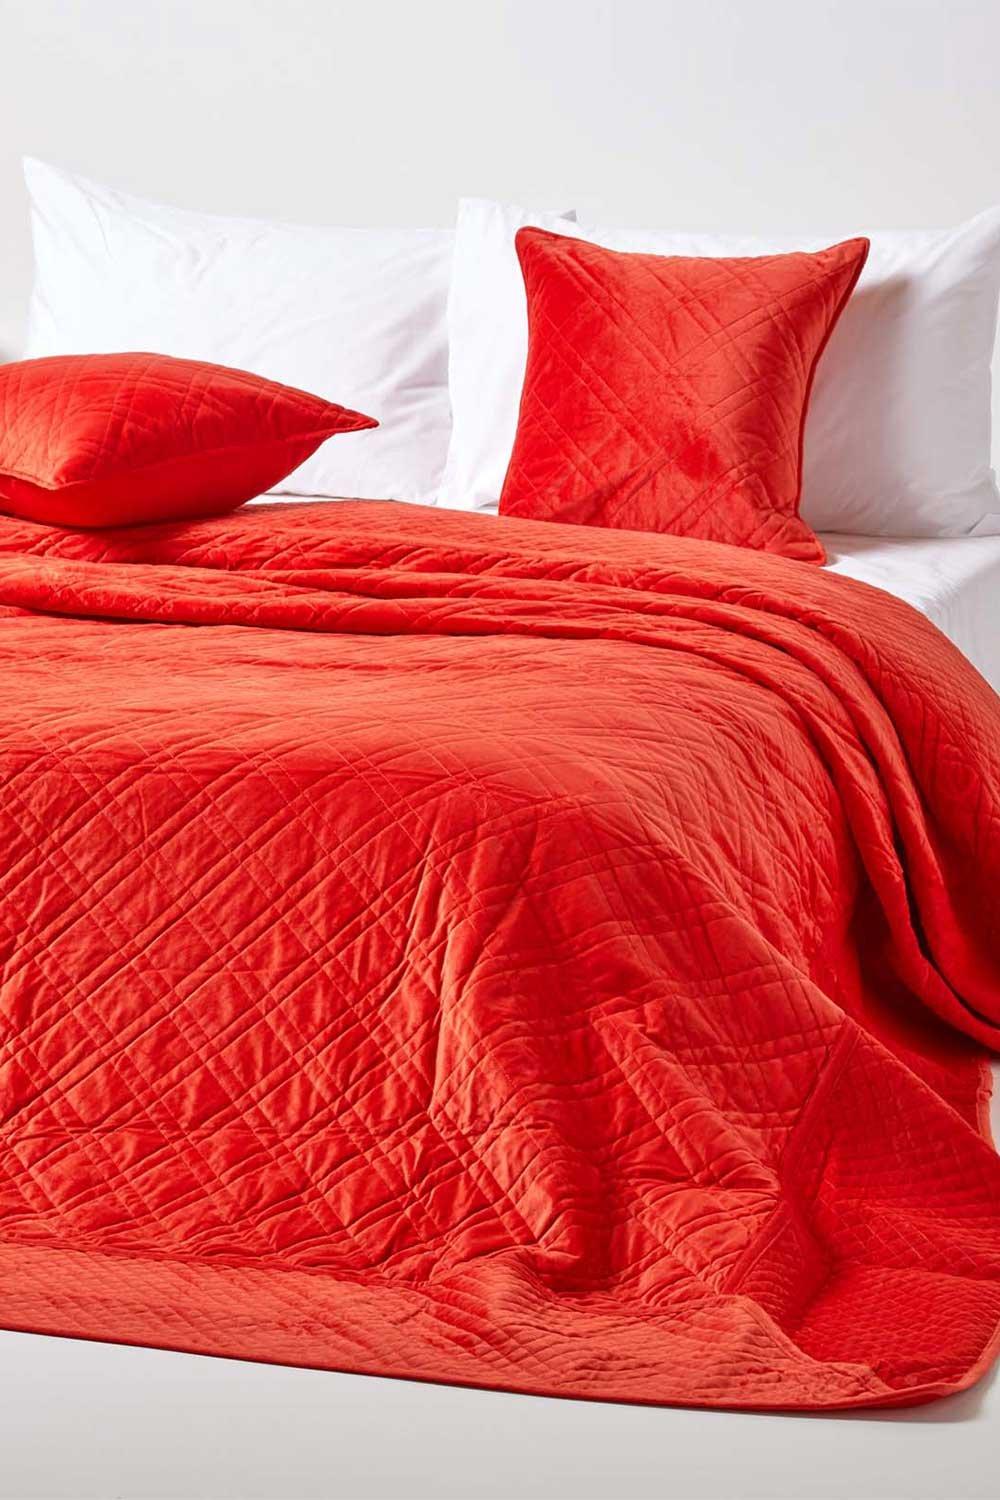 Luxury Quilted Velvet Bedspread Geometric Pattern Throw